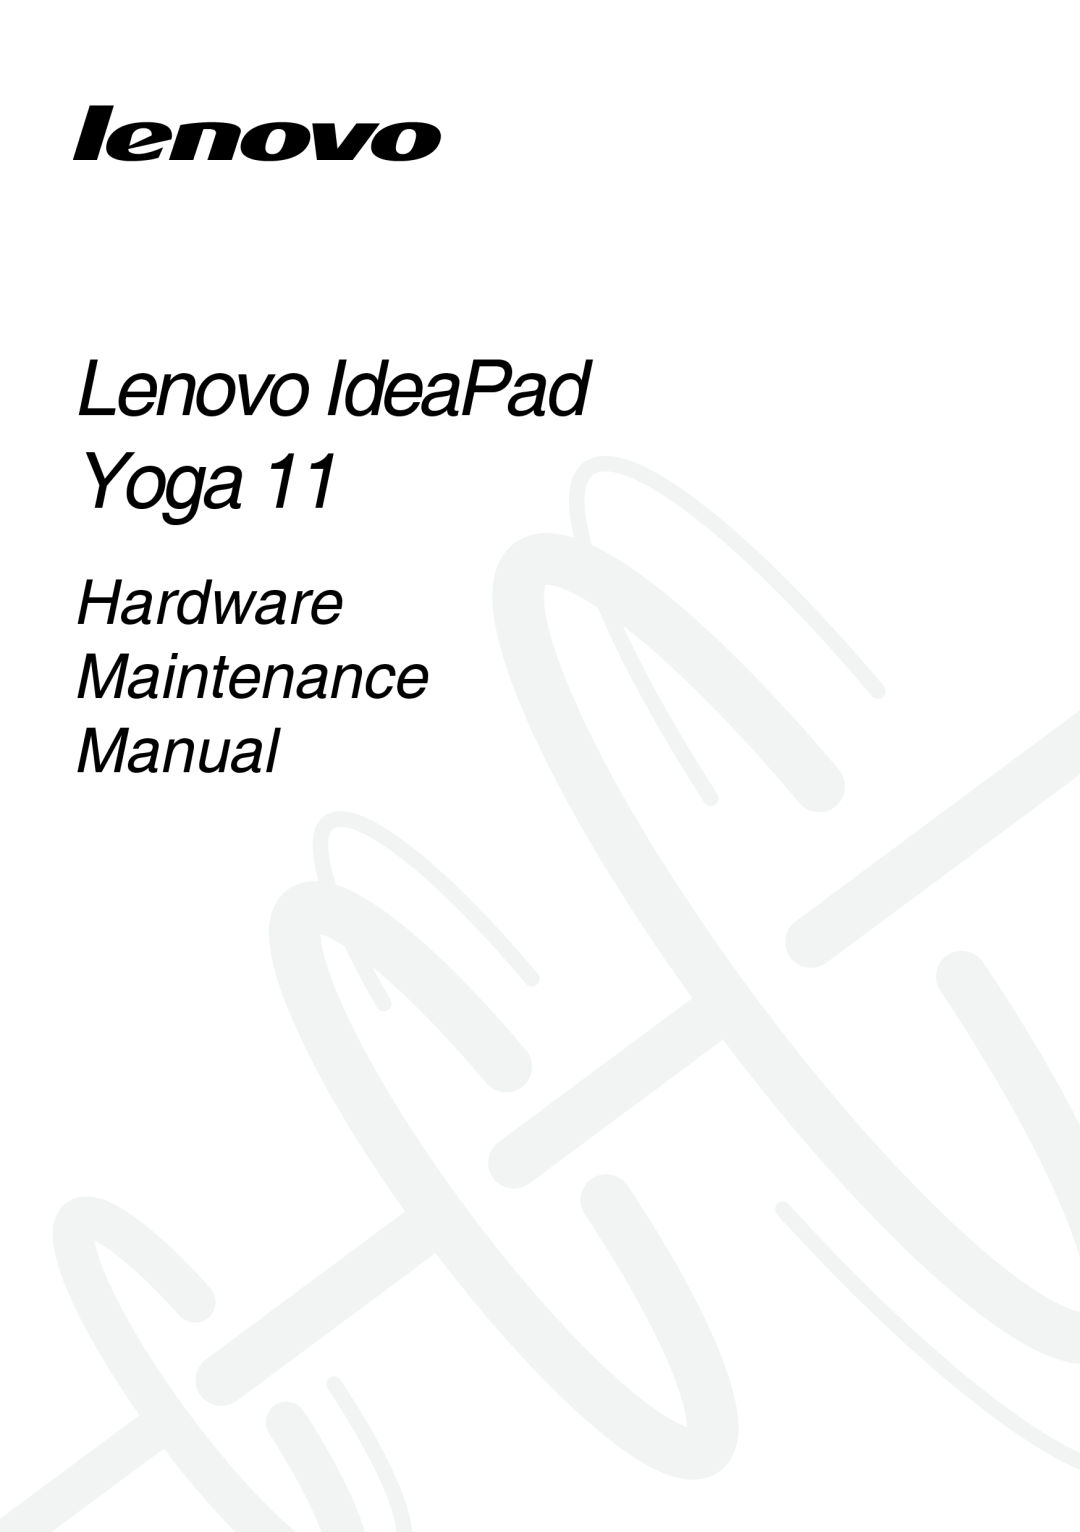 Lenovo 11 manual Lenovo IdeaPad Yoga, Hardware Maintenance Manual 